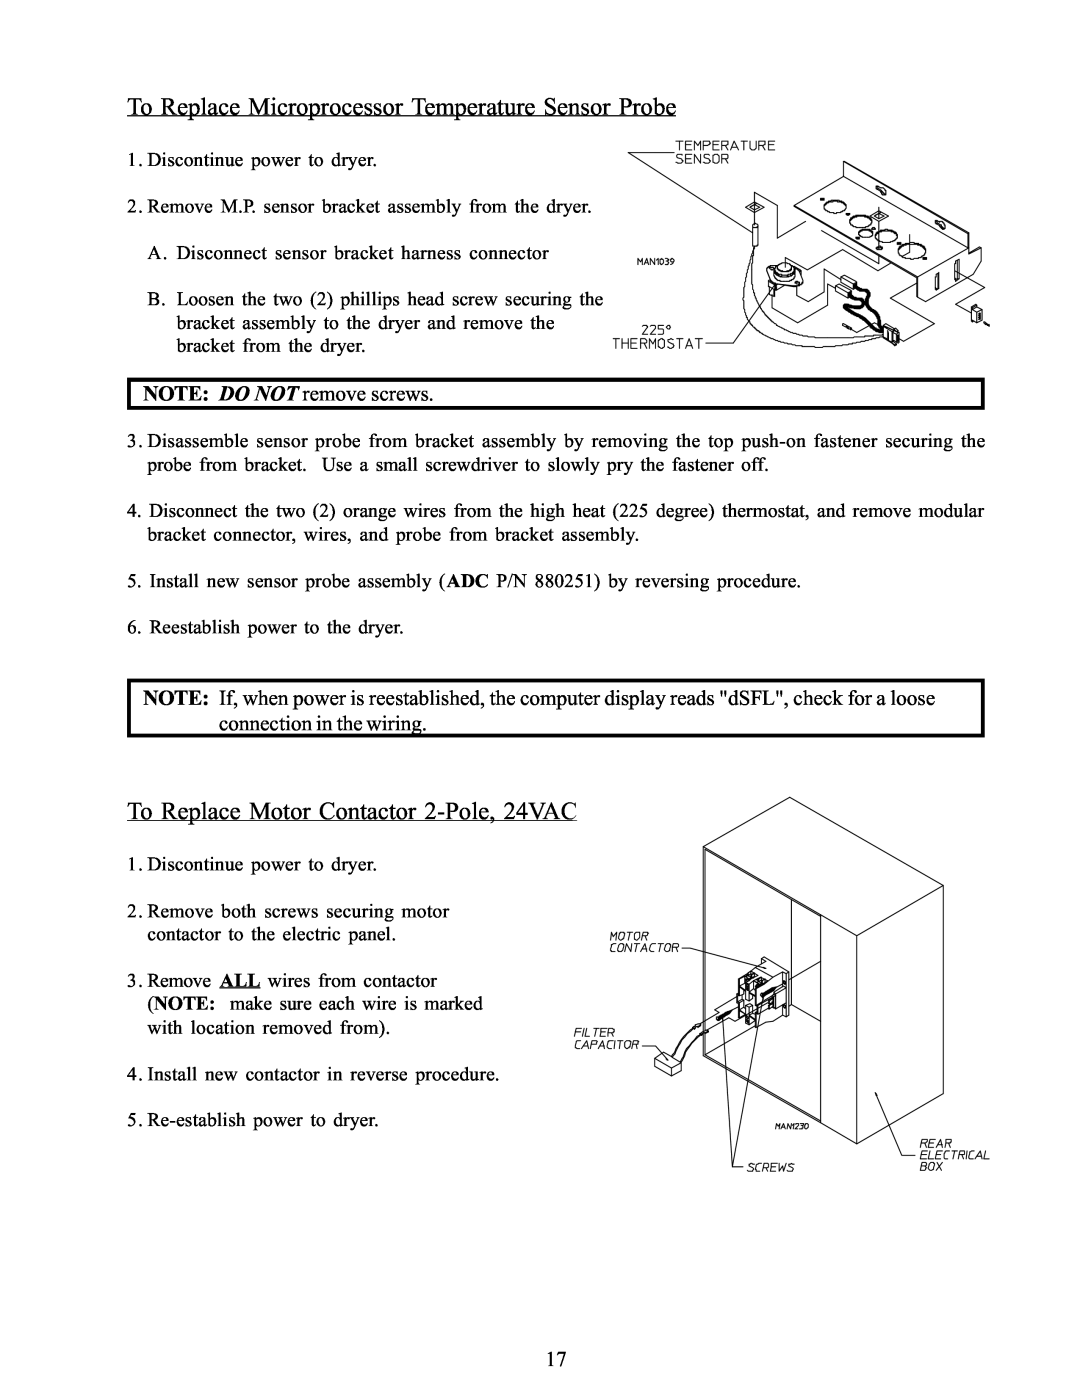 American Dryer Corp WDA-385 To Replace Microprocessor Temperature Sensor Probe, To Replace Motor Contactor 2-Pole, 24VAC 